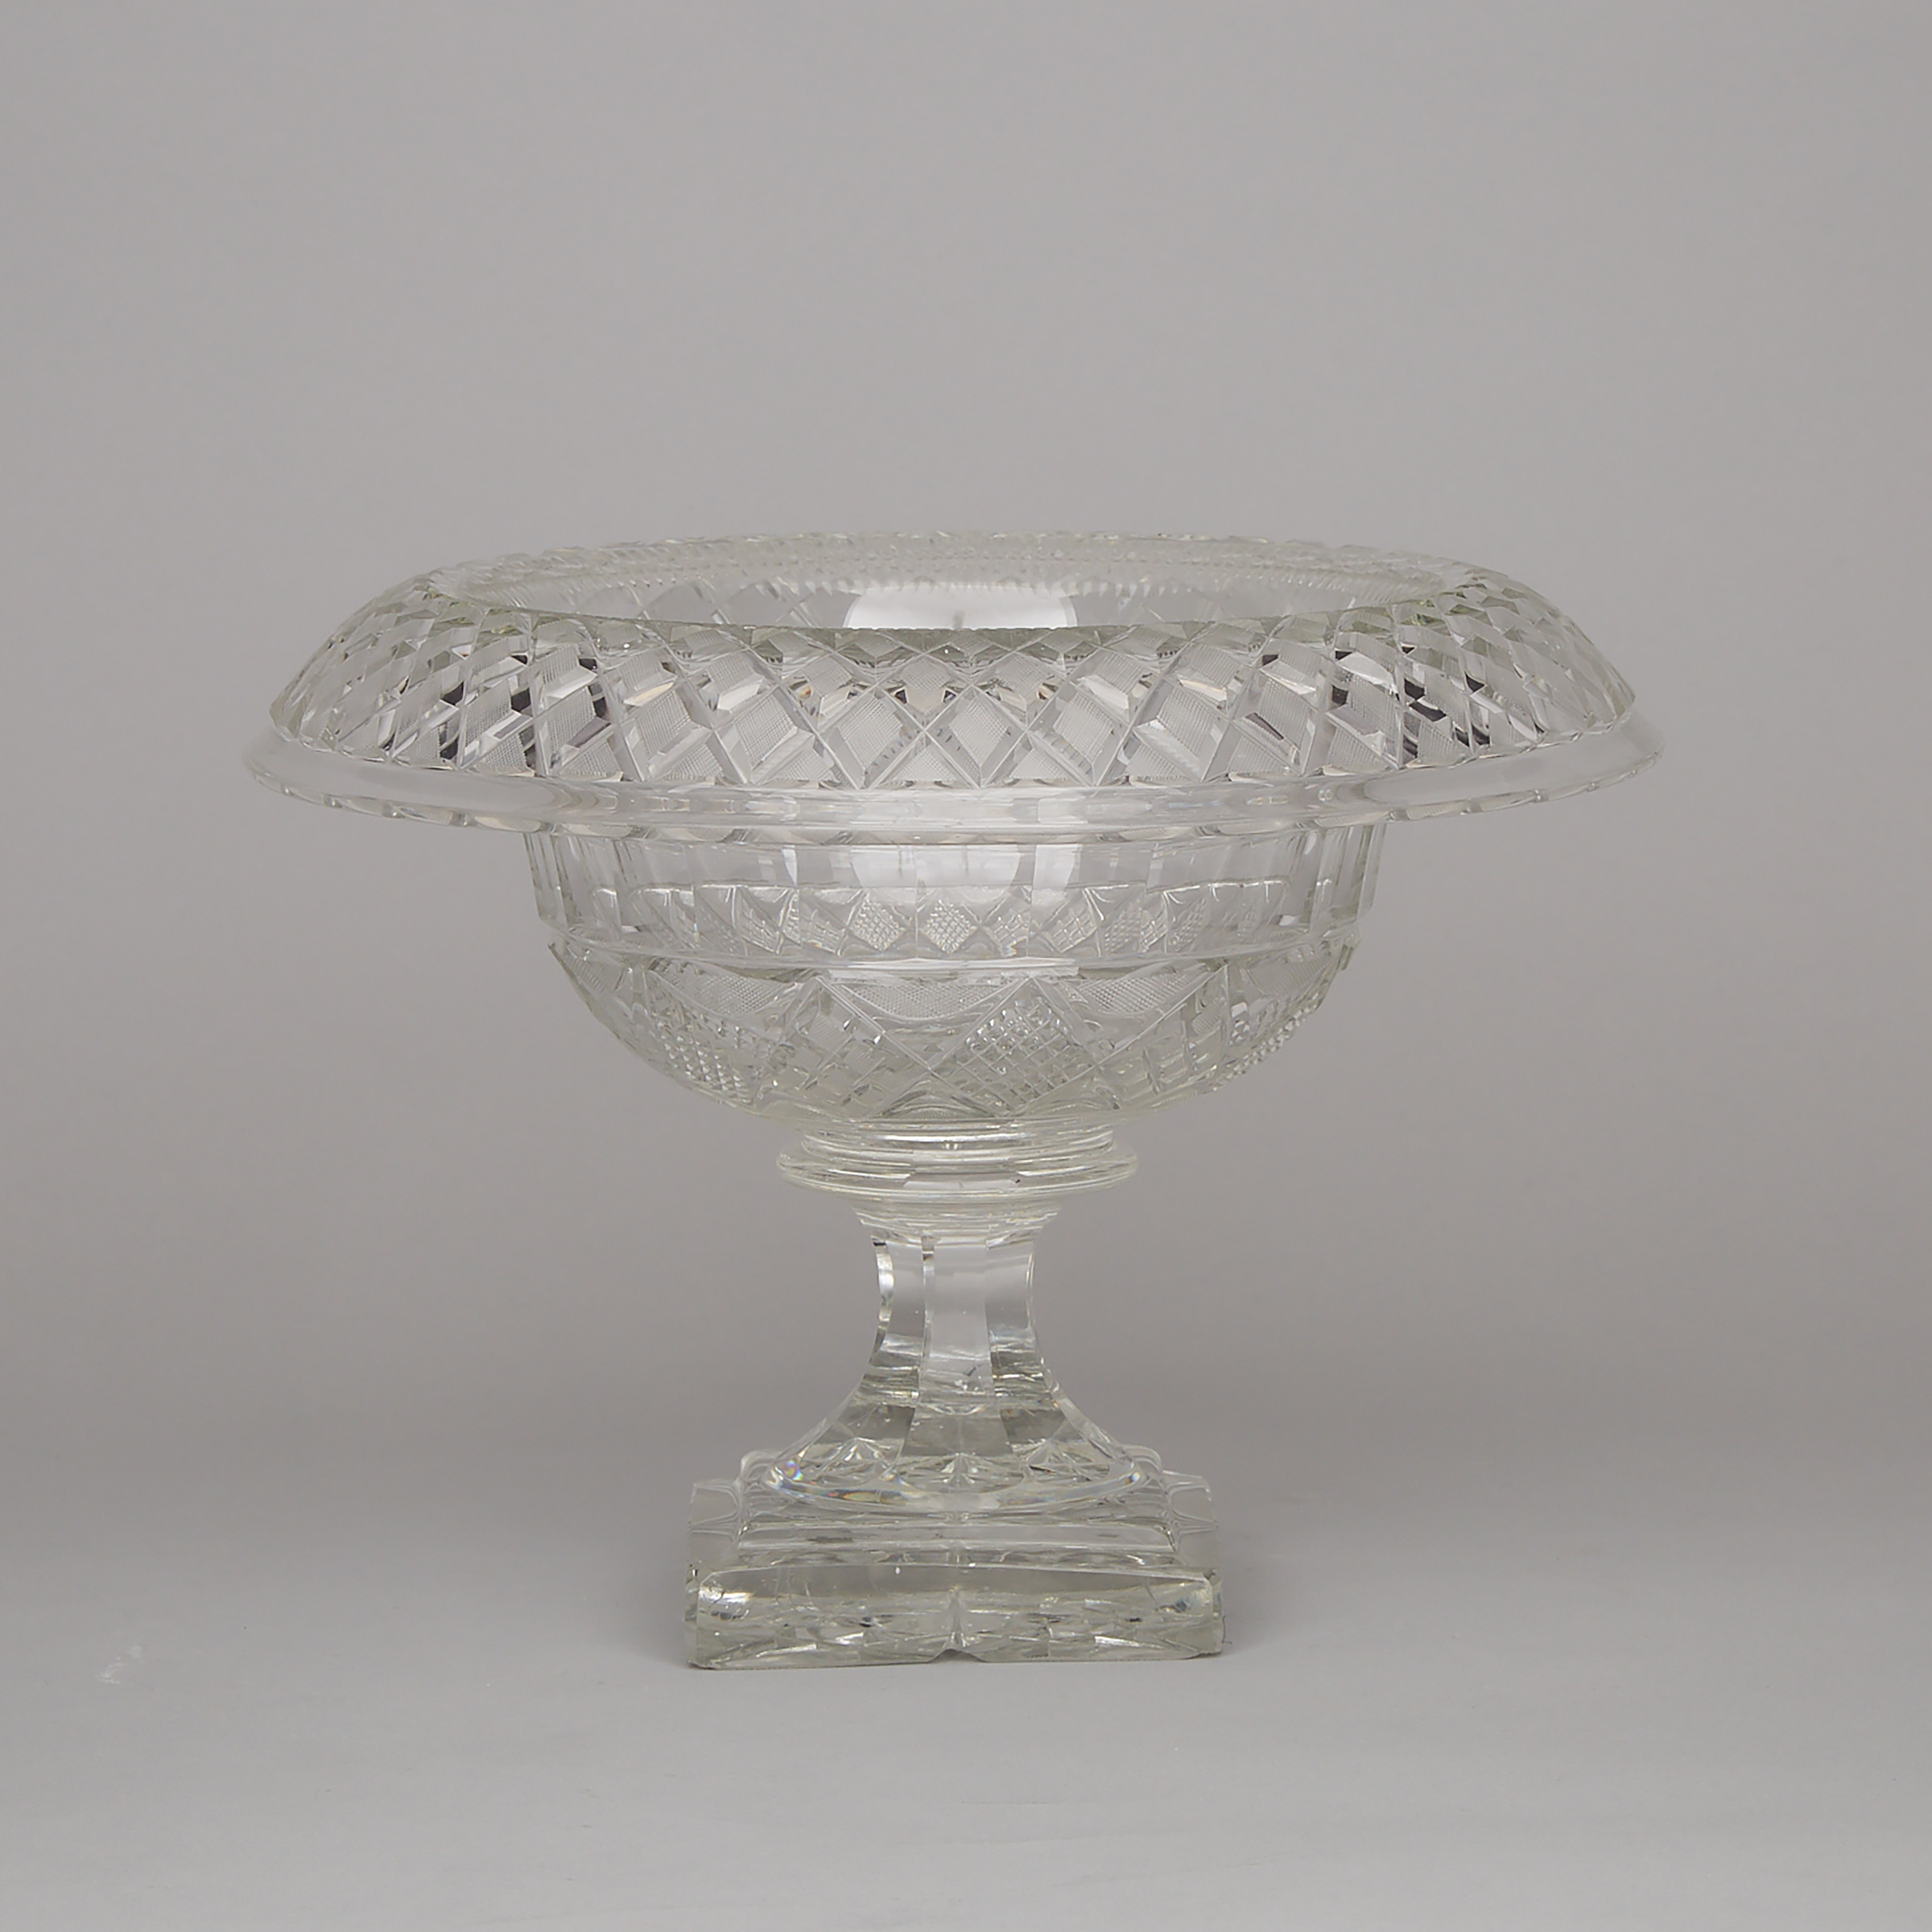 English Cut Glass Centrepiece Bowl, 19th century